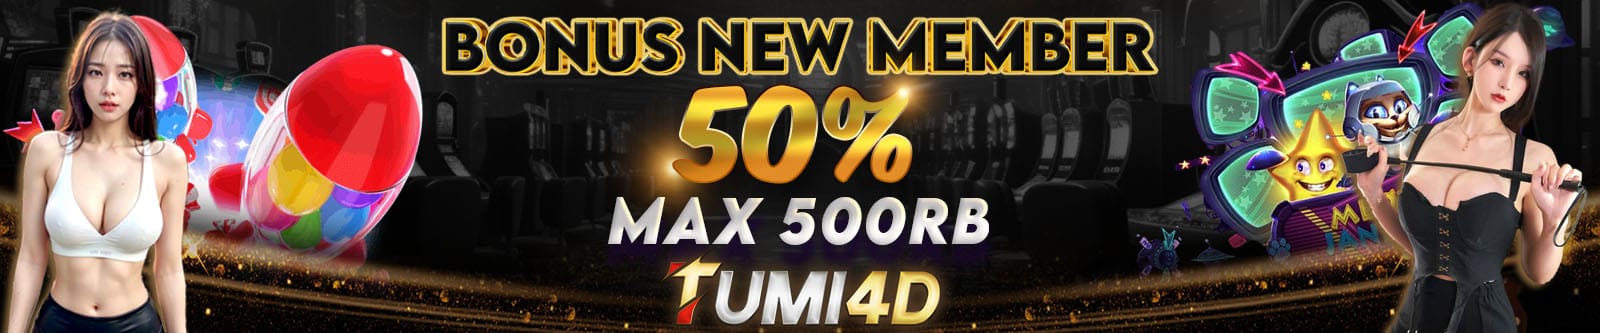 Tumi4d Bonus Member Baru 50% Up To 500RB